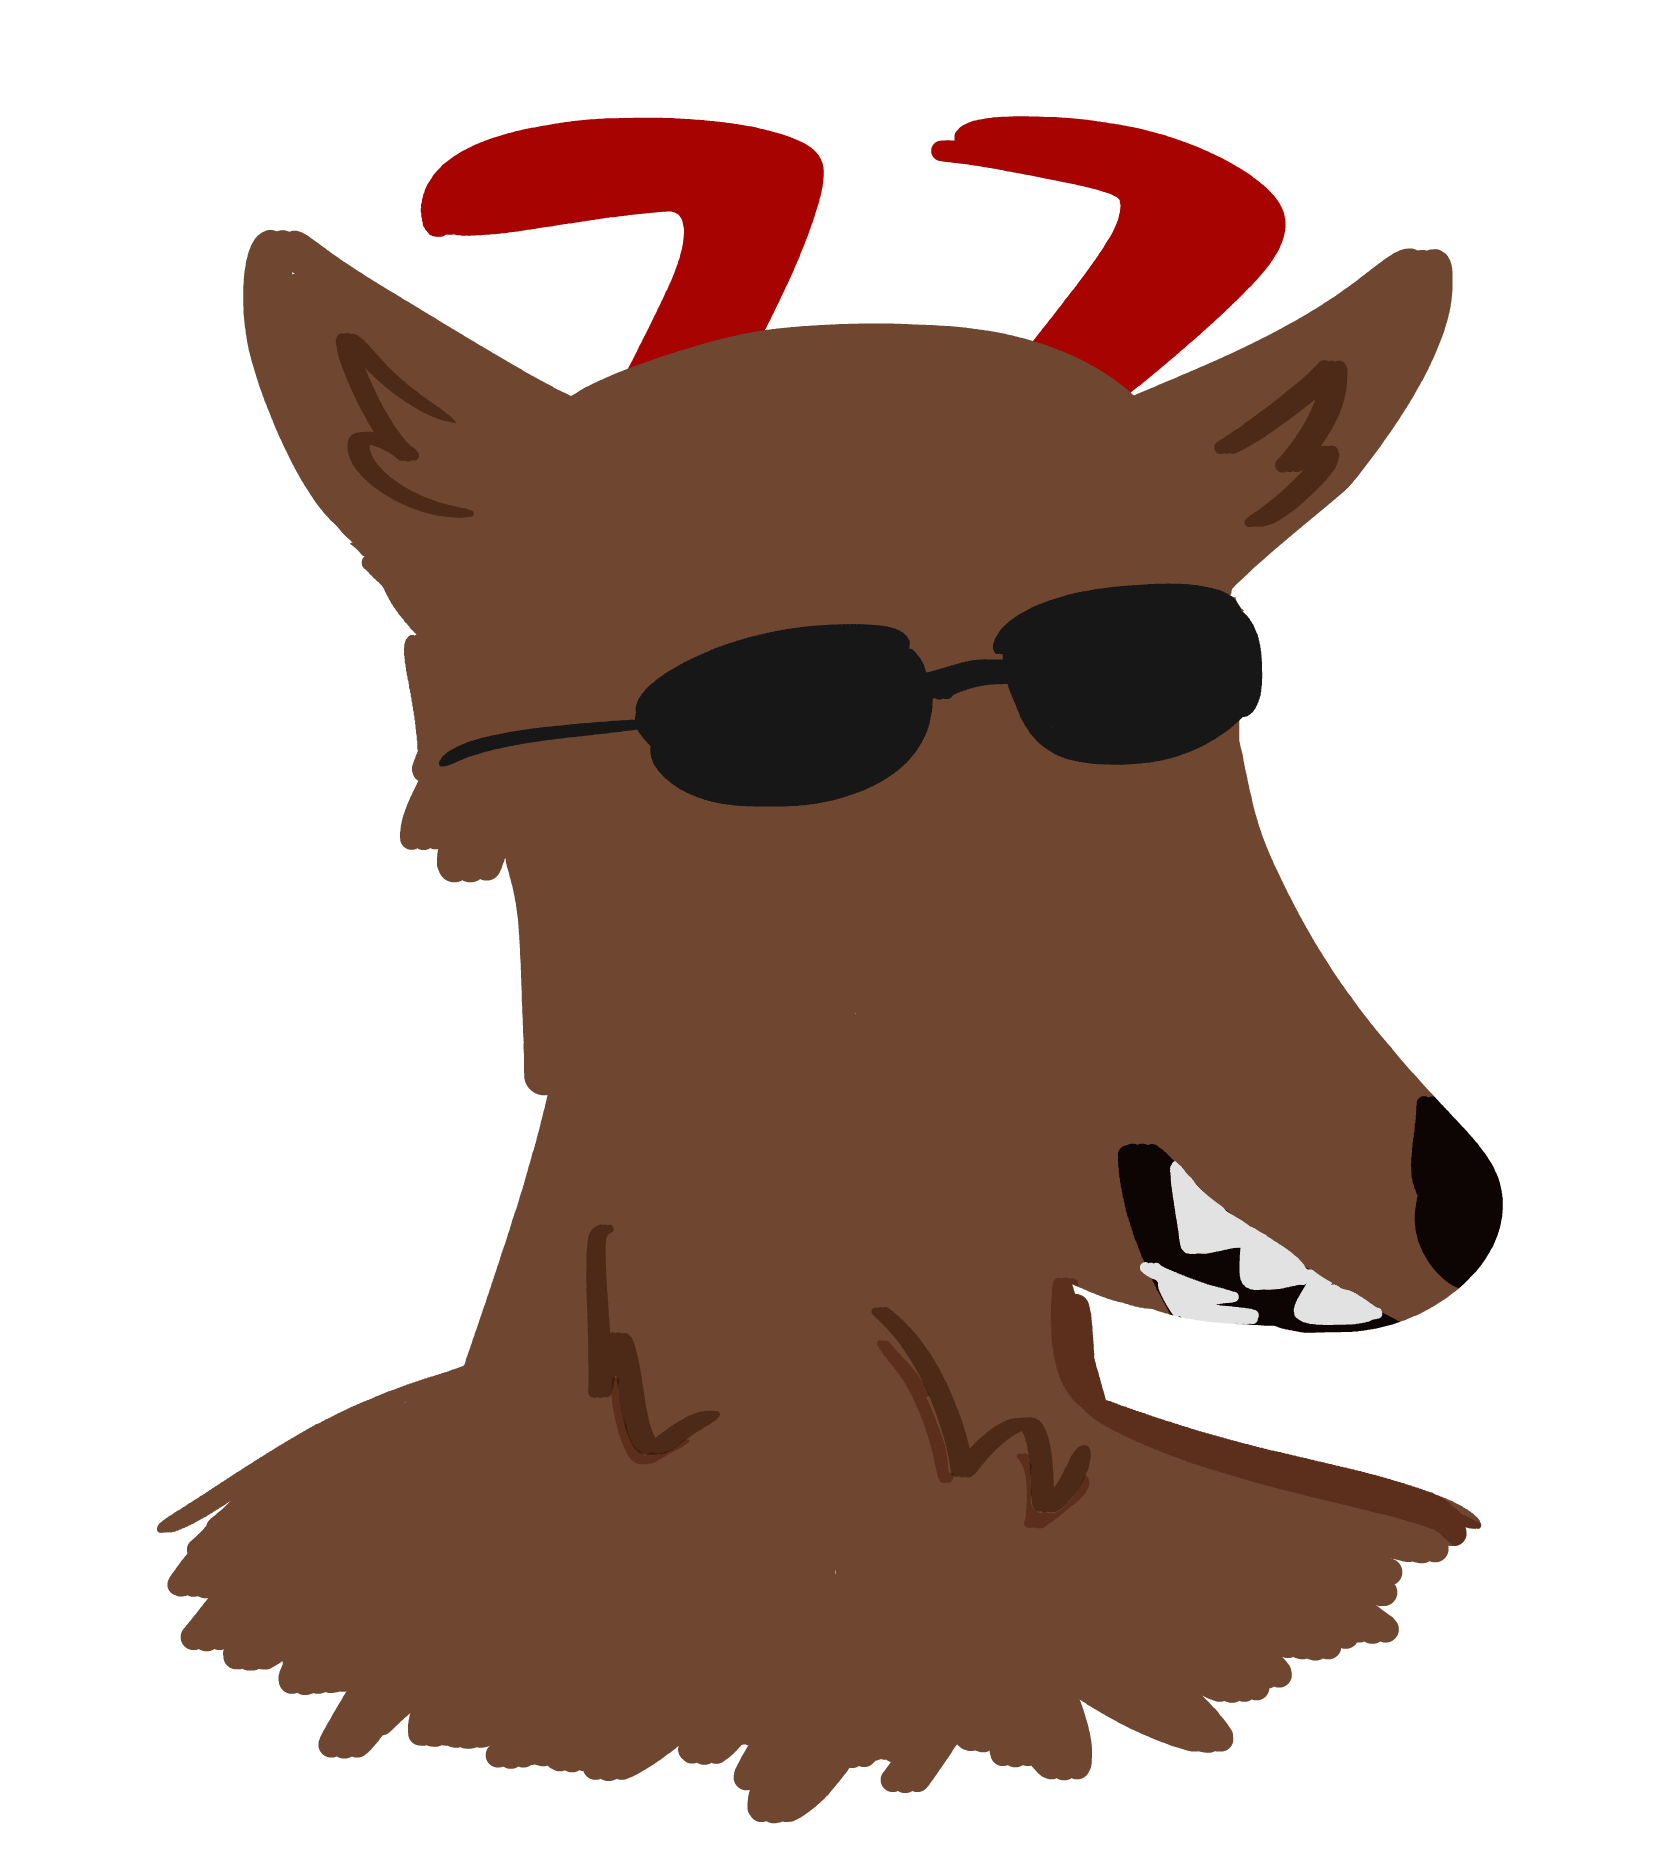 A werewolf with demon horns wearing sunglasses